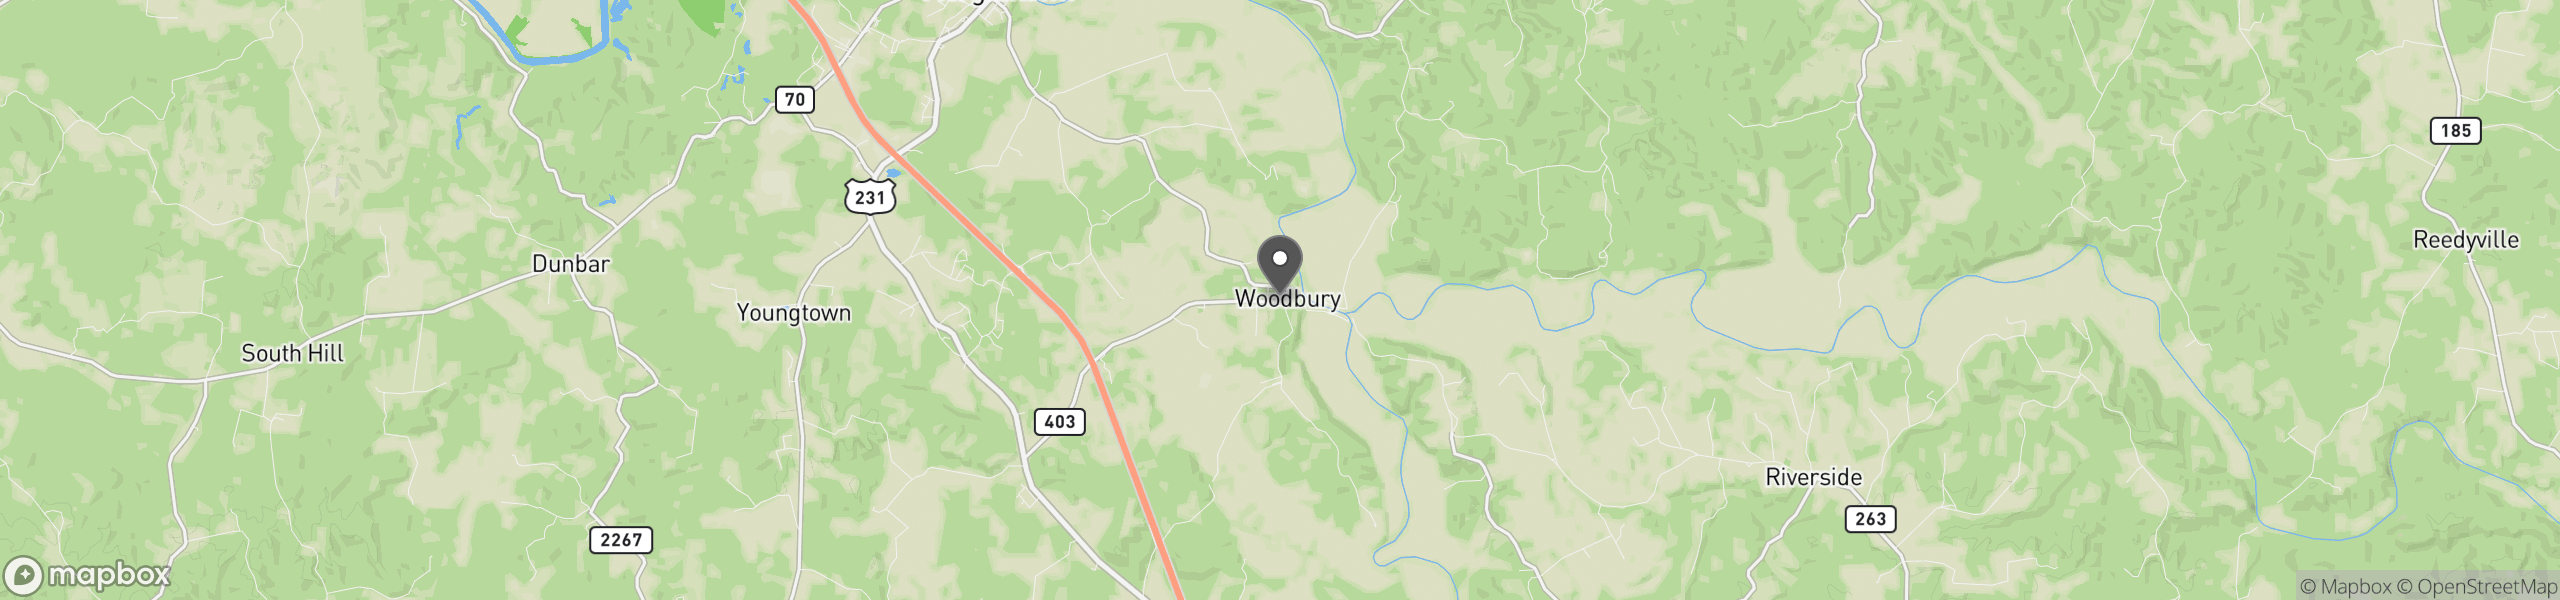 Woodbury, KY 42288